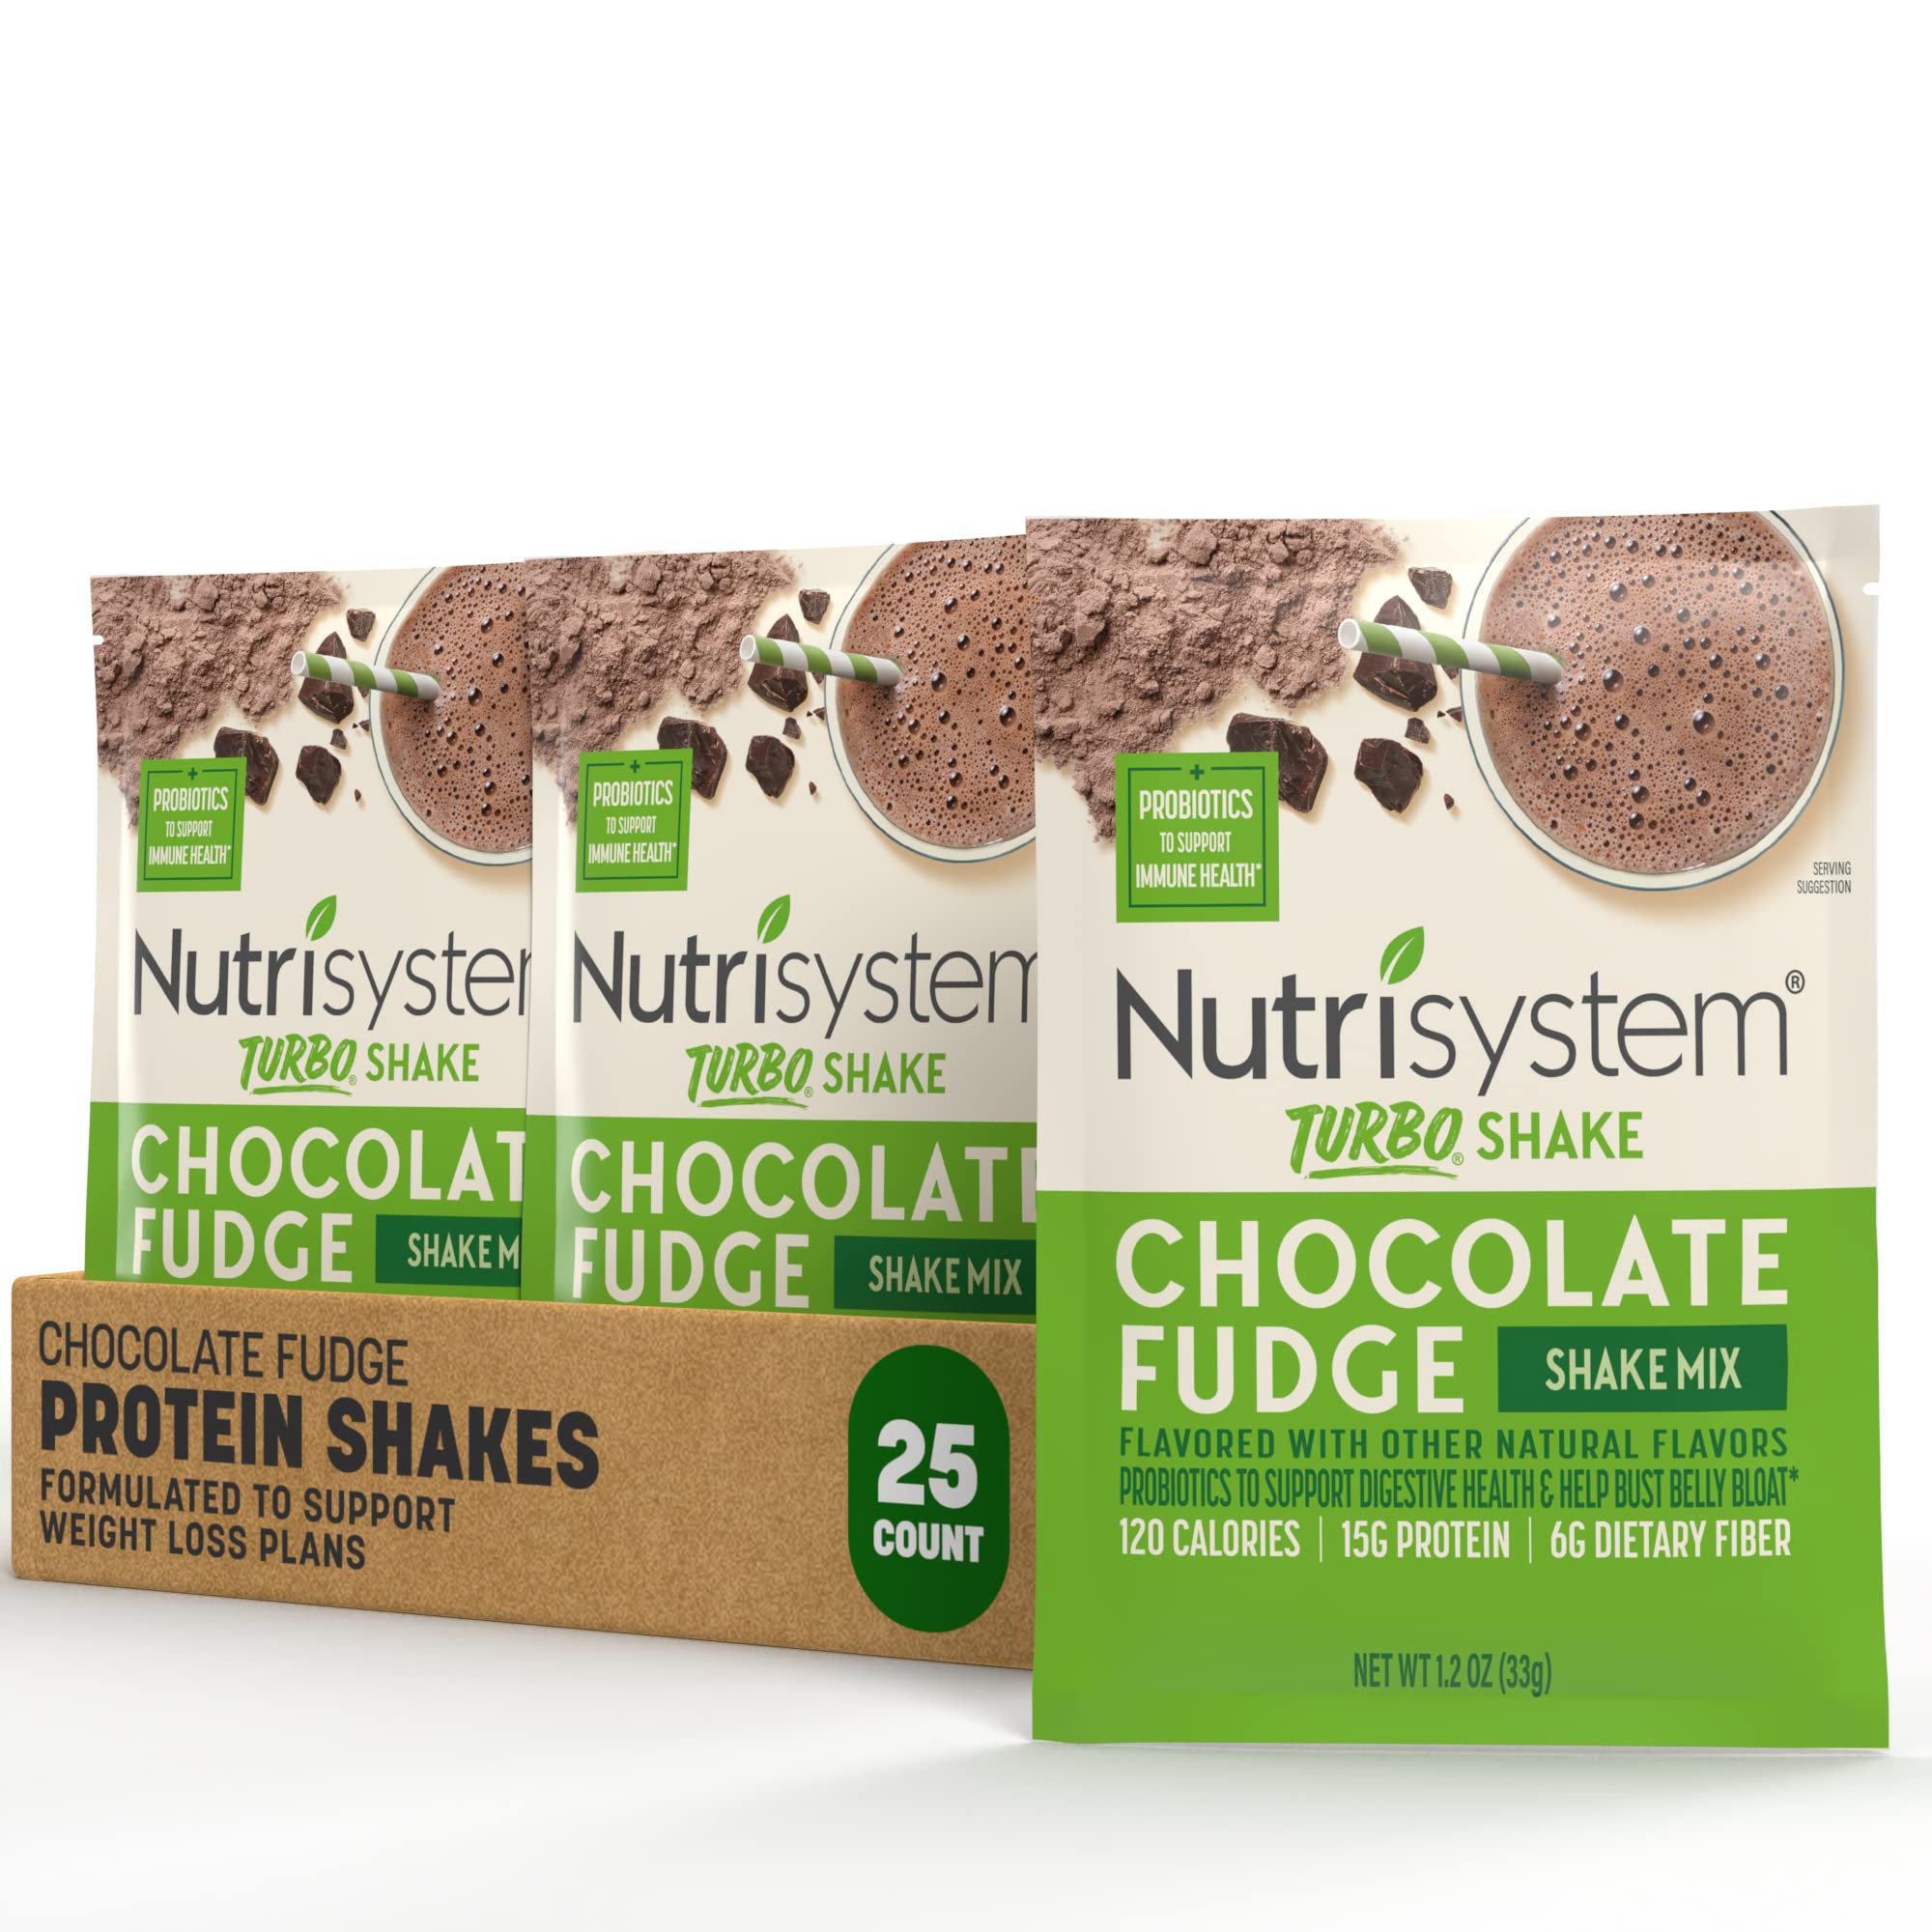 Generic Nutrisystem Nutricrush Chocolate Shake Mix, 1.4 oz, 5